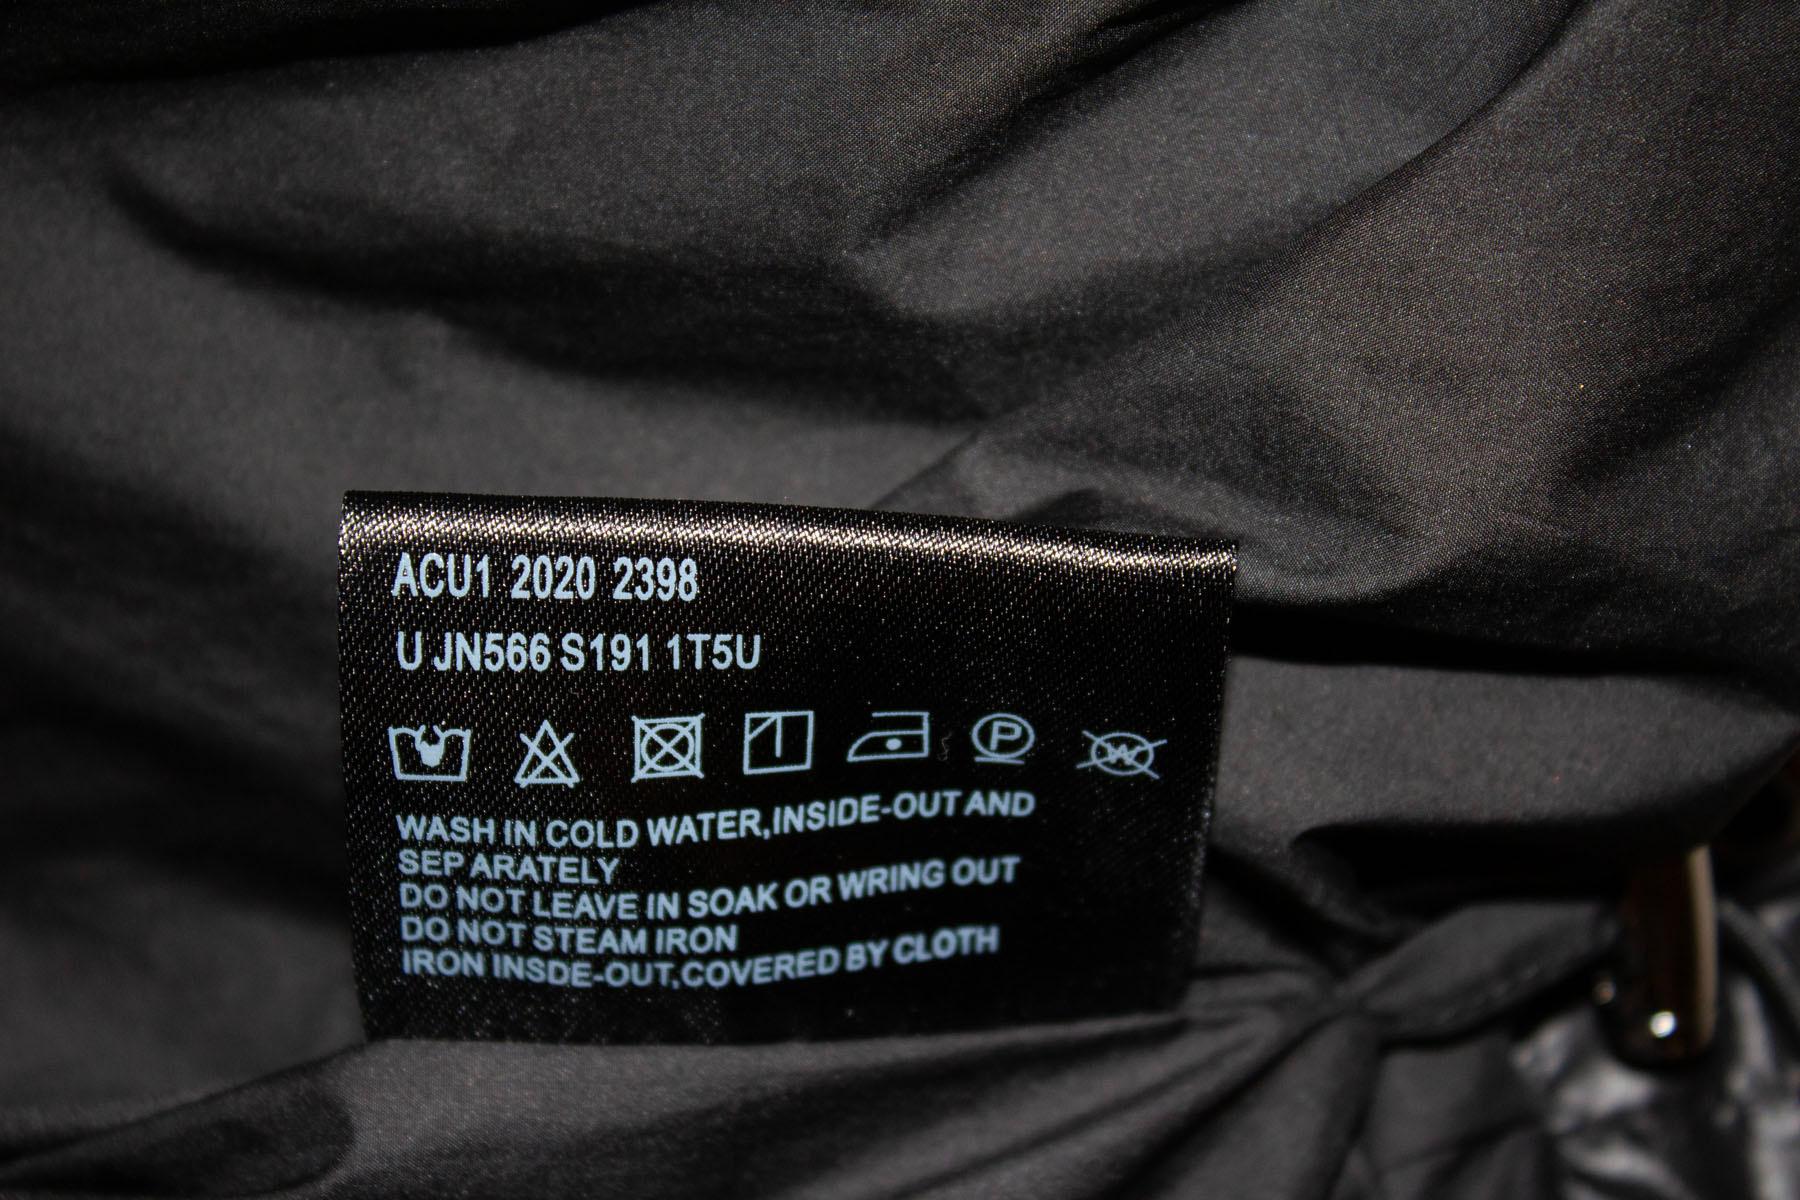 Black Prada Puffa Jacket with Detachable Sleaves For Sale 4